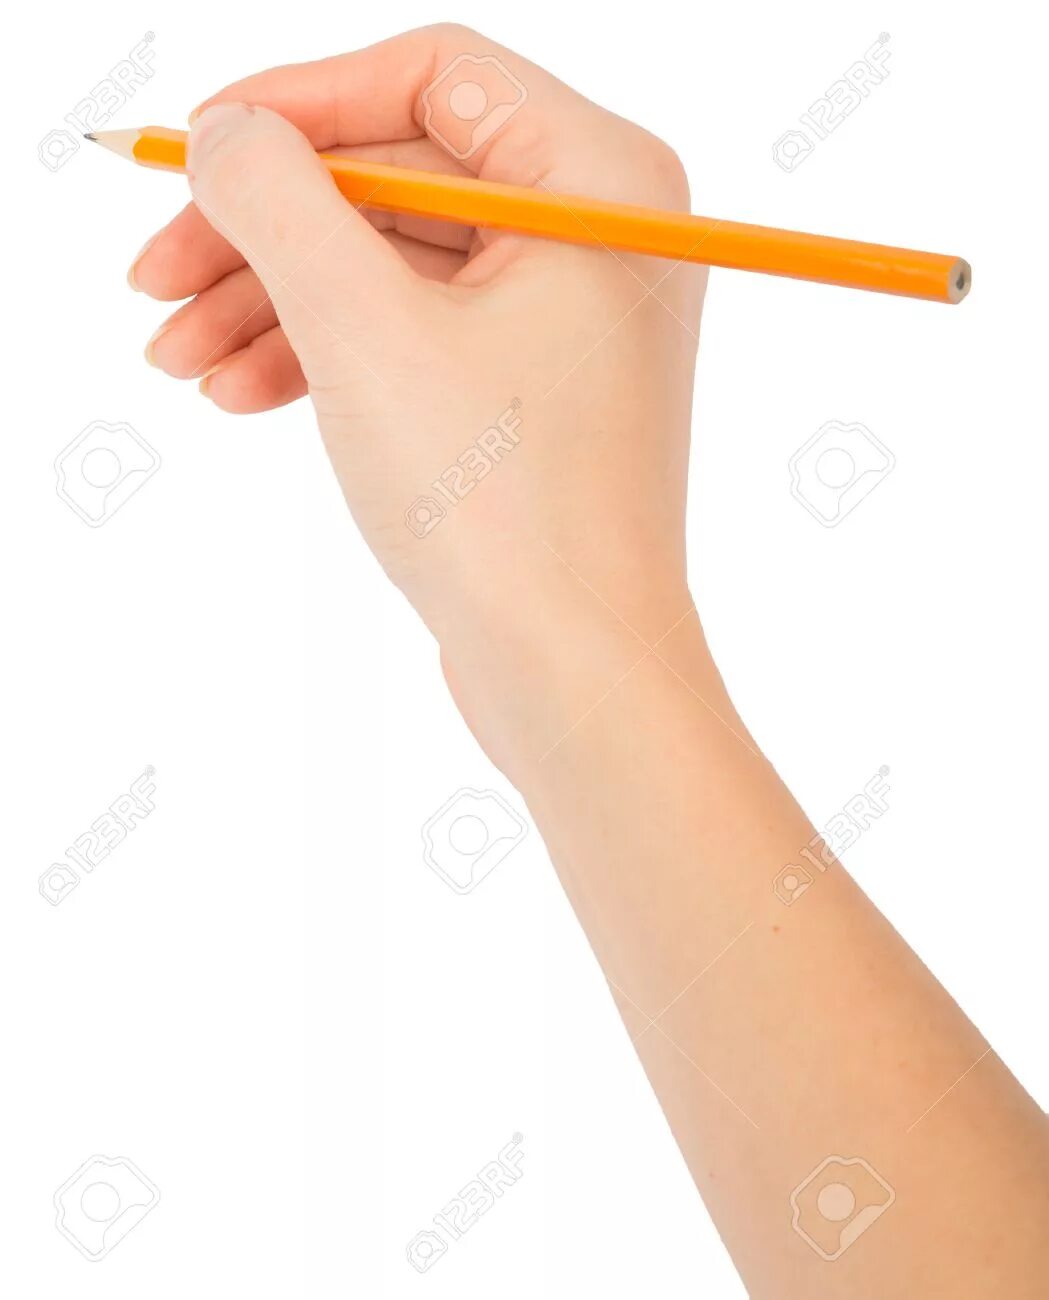 Руки карандашом. Рука держит карандаш. Рук с карандашом без фона. Рука держащая карандаш сверху.